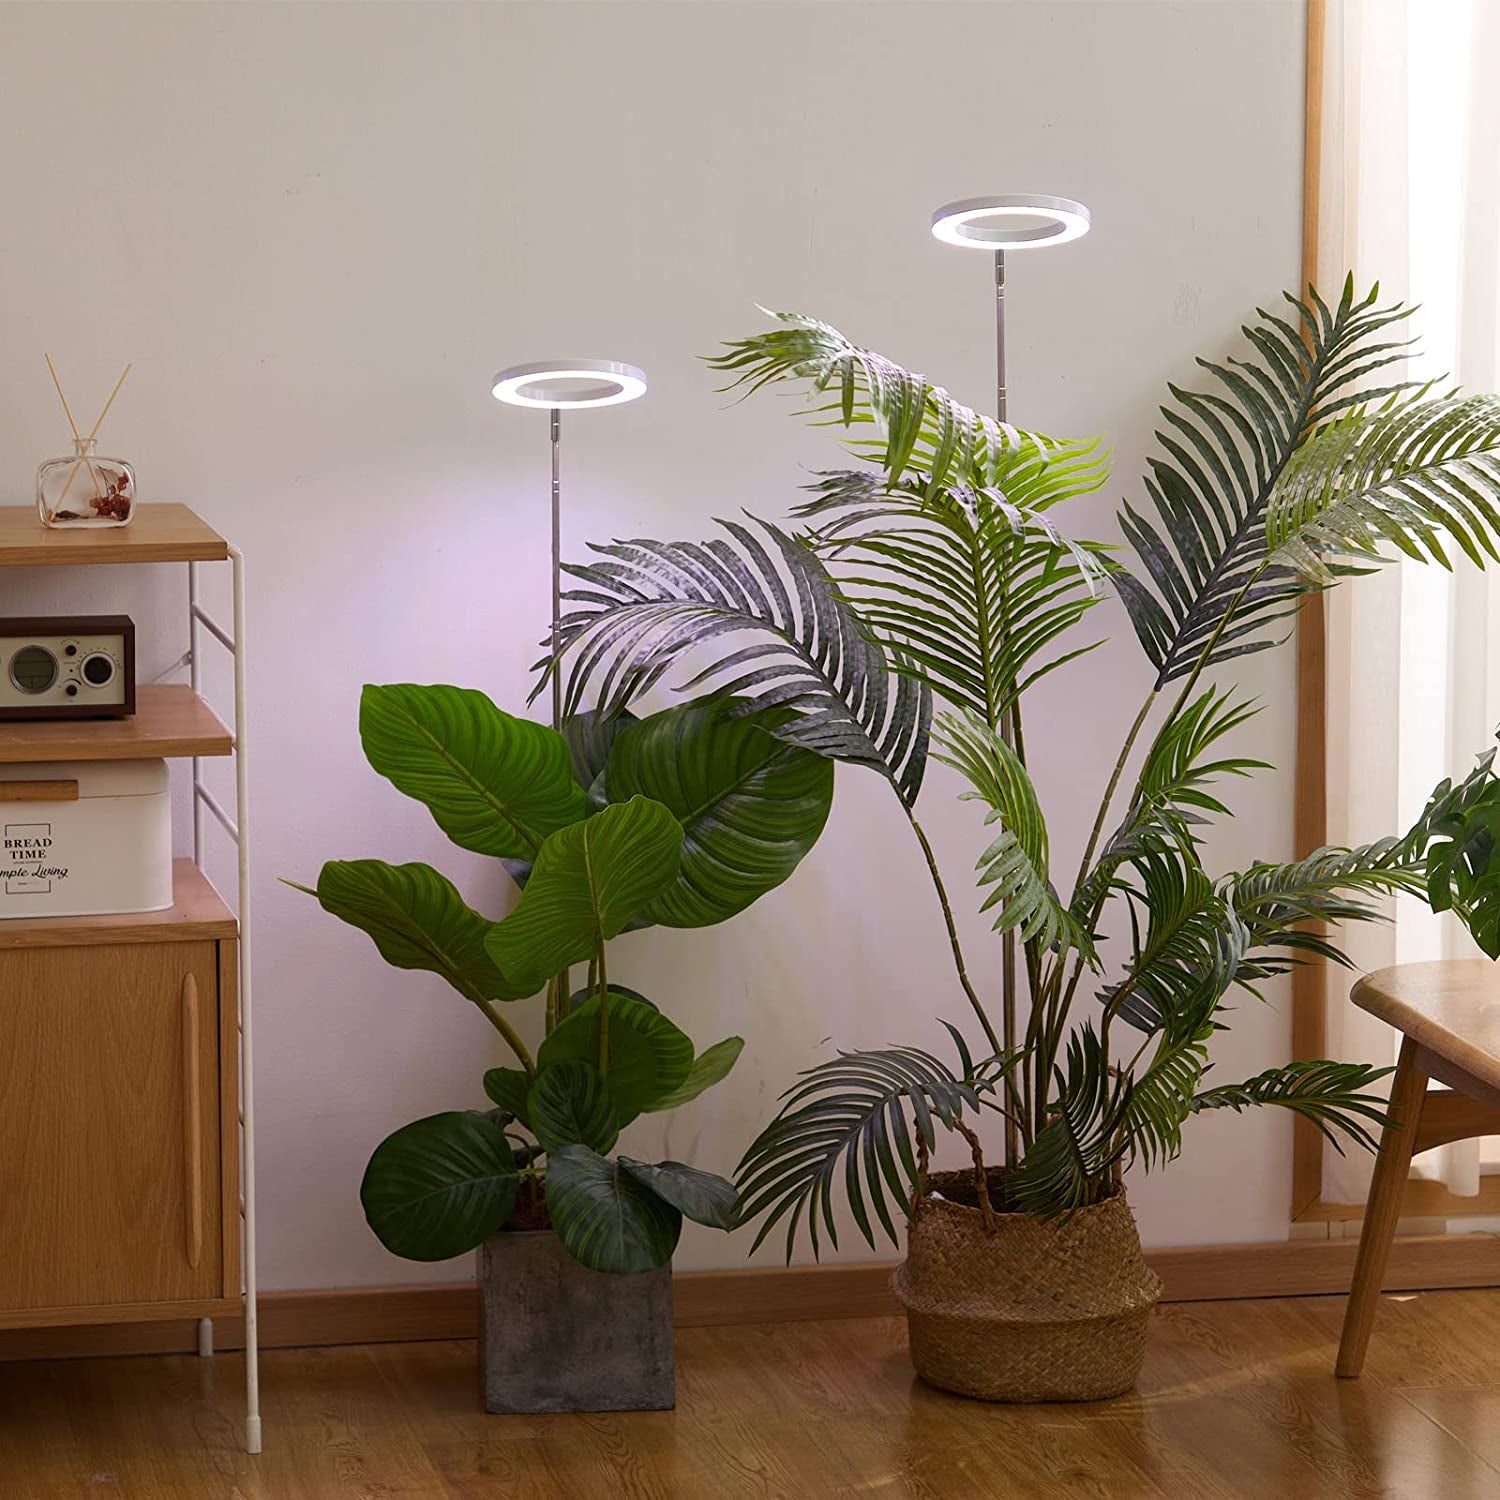 Plant Grow Light, LED Growing Light Full Spectrum for Indoor Plants,Height Adjustable, Automatic Timer, 5V Low Safe Voltage,Idea for Large Plant Light